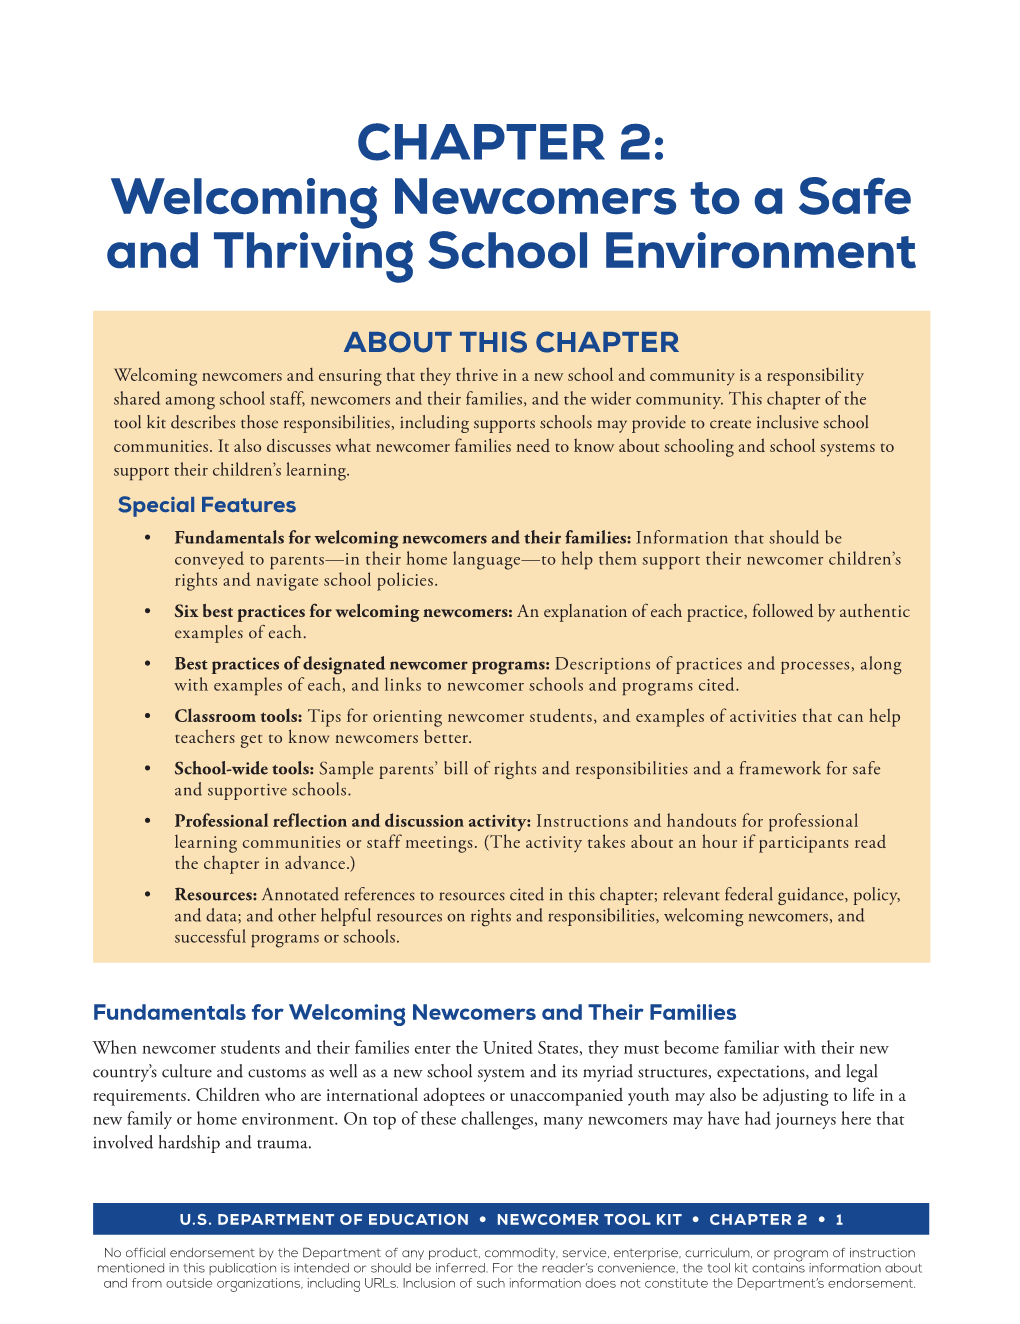 Newcomer Tool Kit Chapter 2 (PDF)